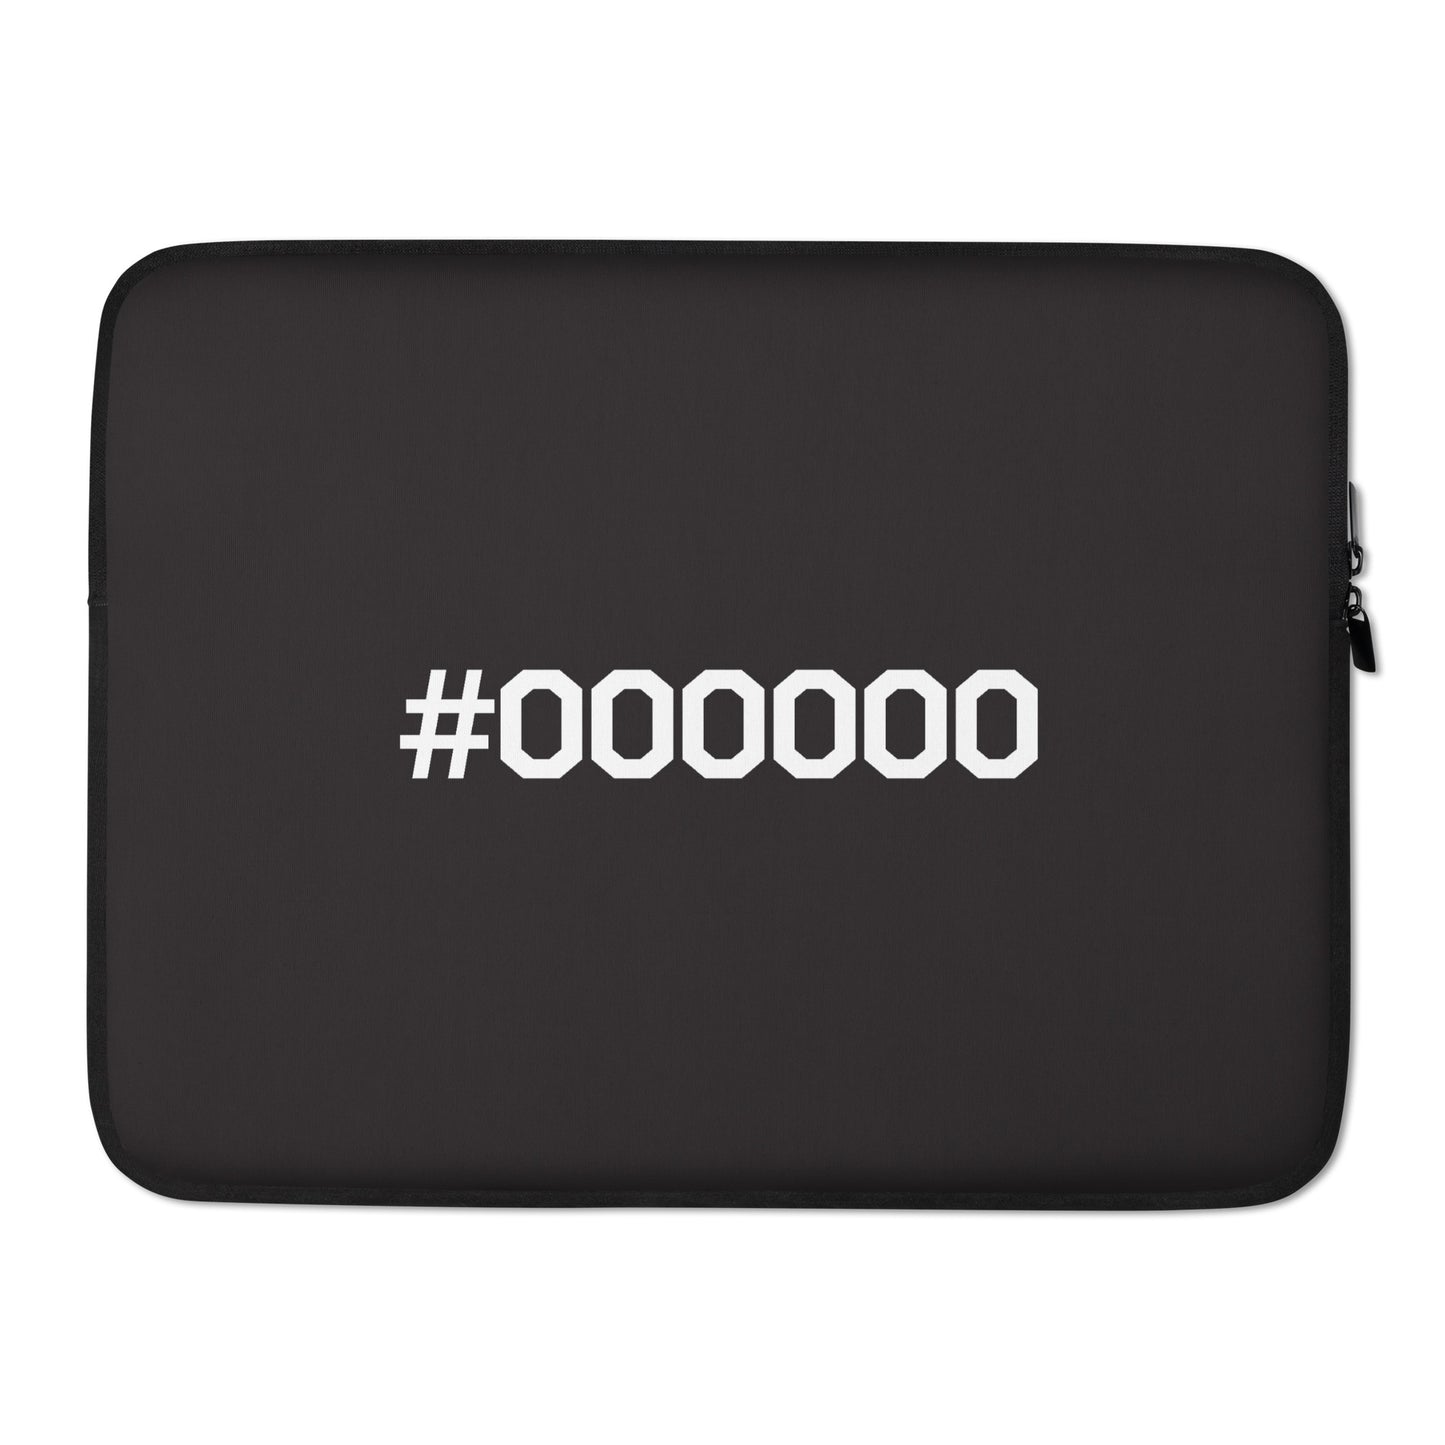 #000000 Laptop Sleeve